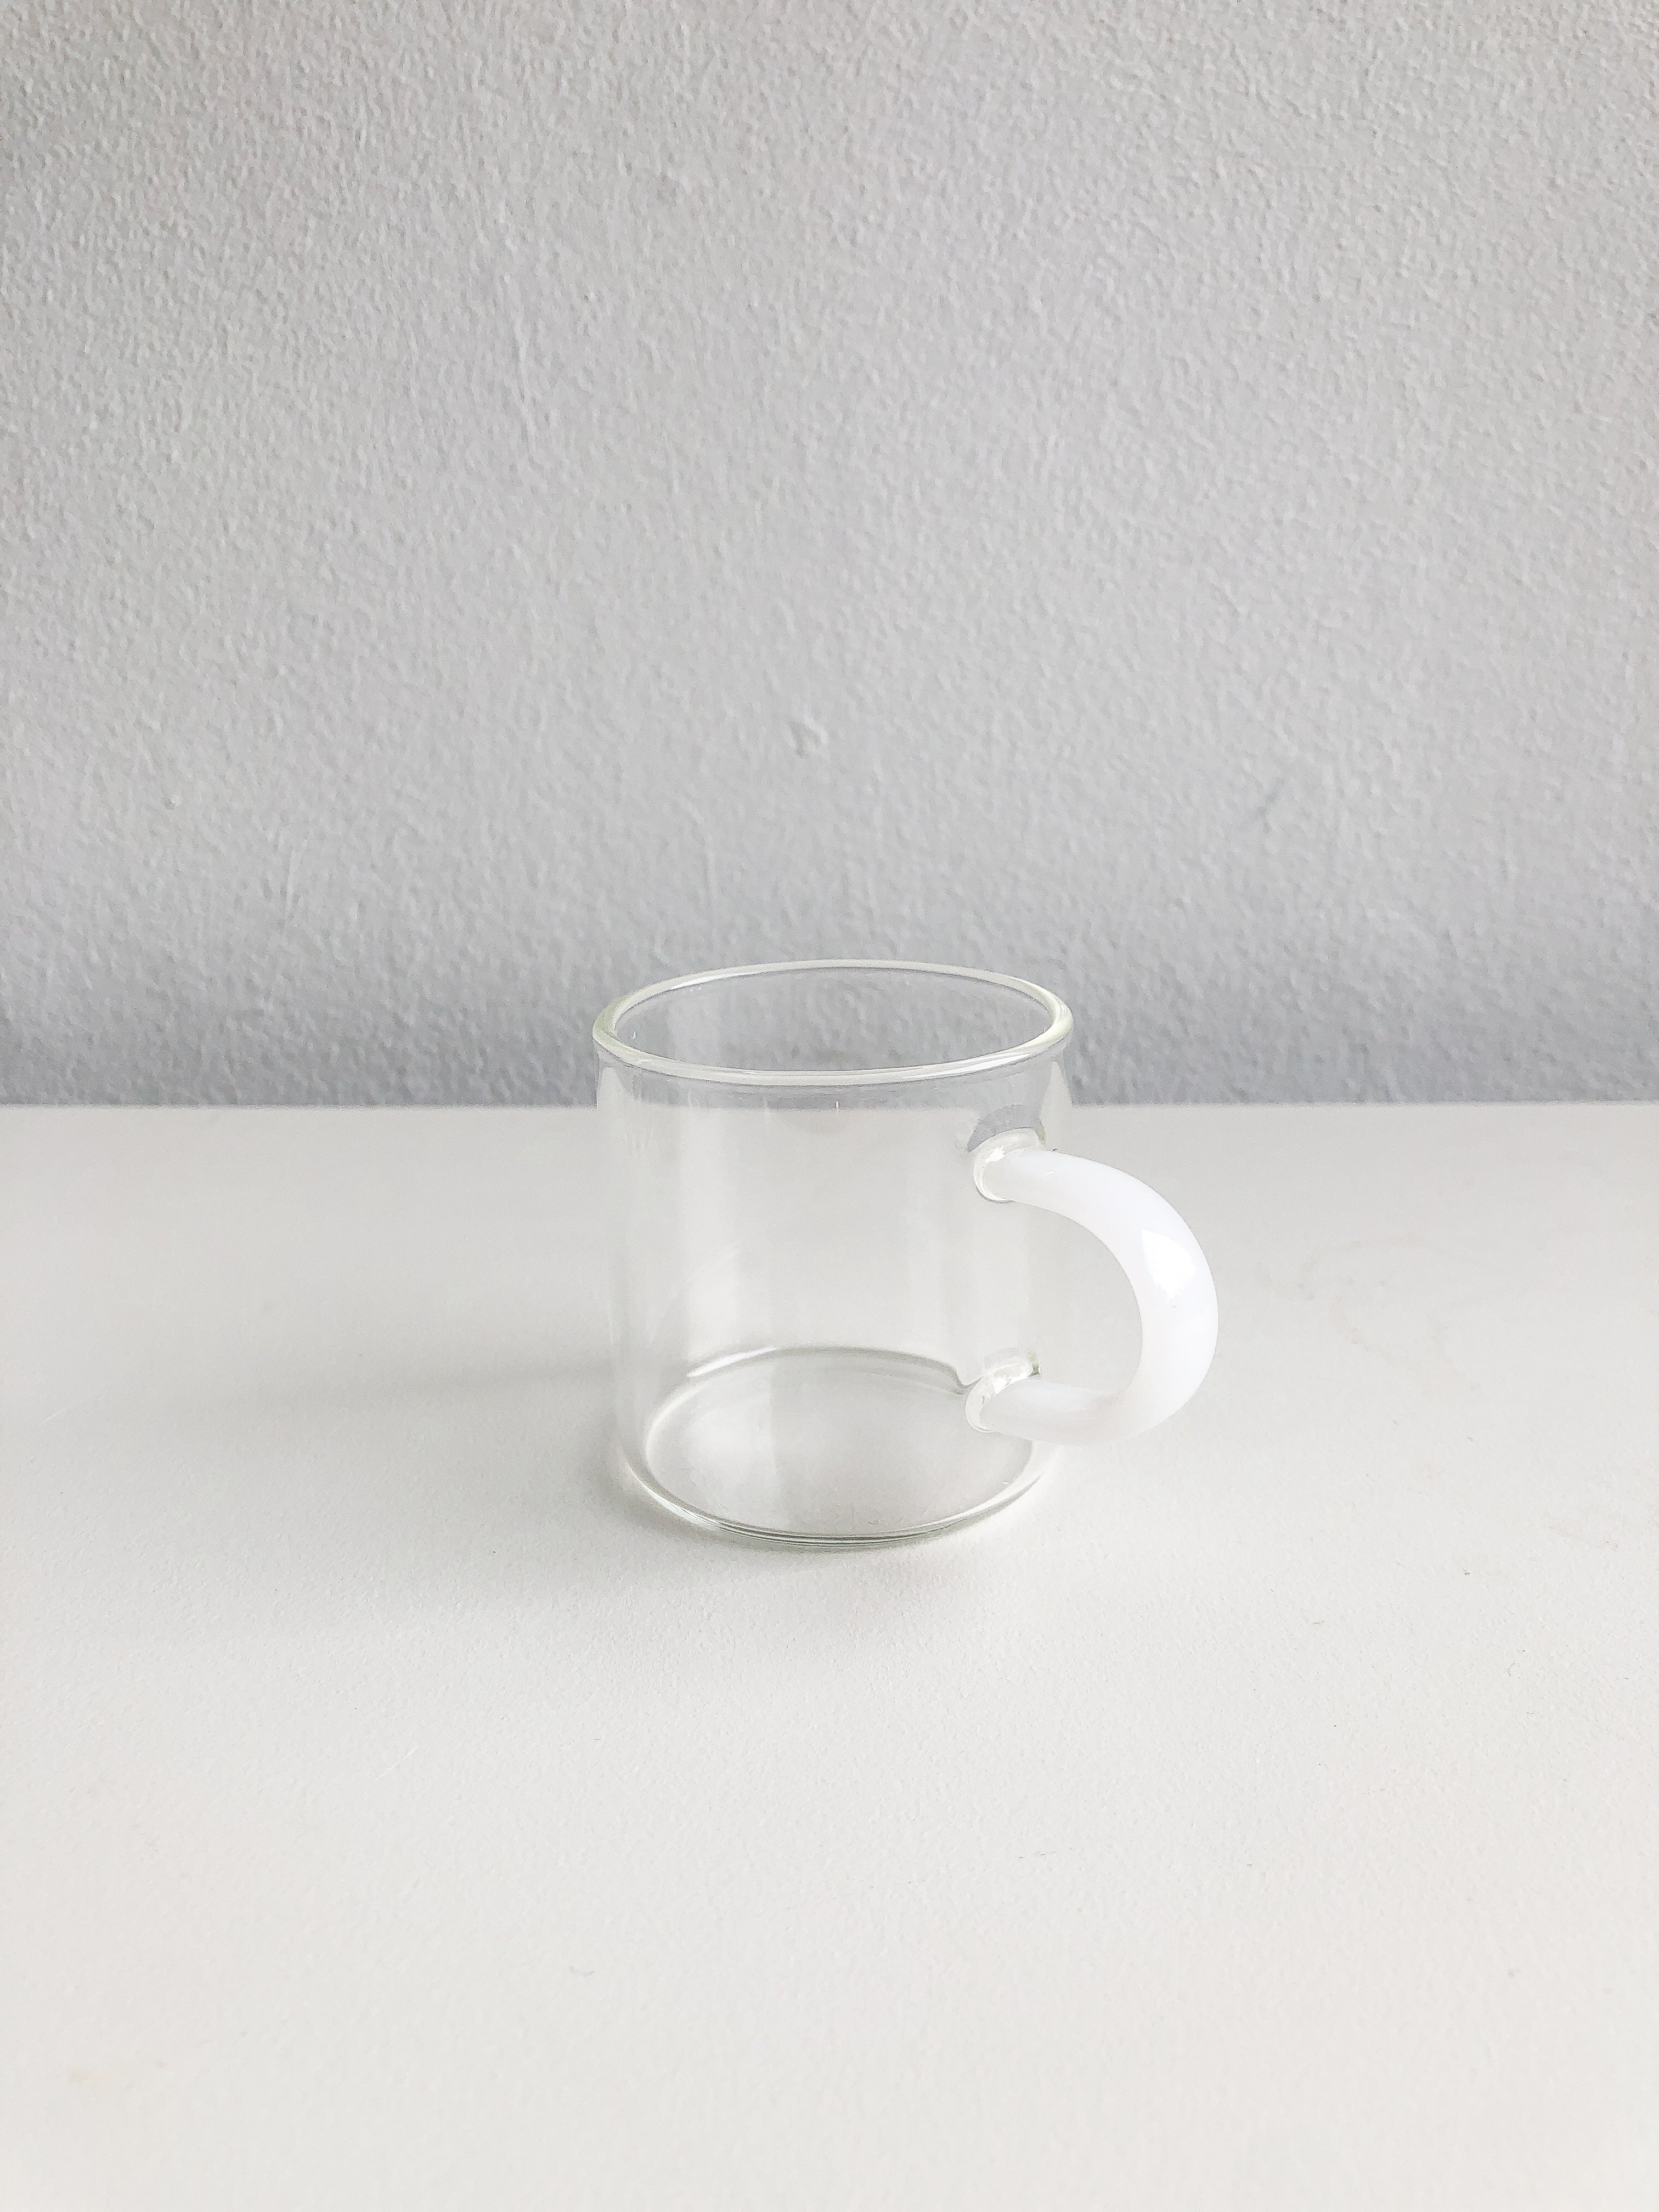 Accent Macchiato Glass in Milk by PROSE Tabletop